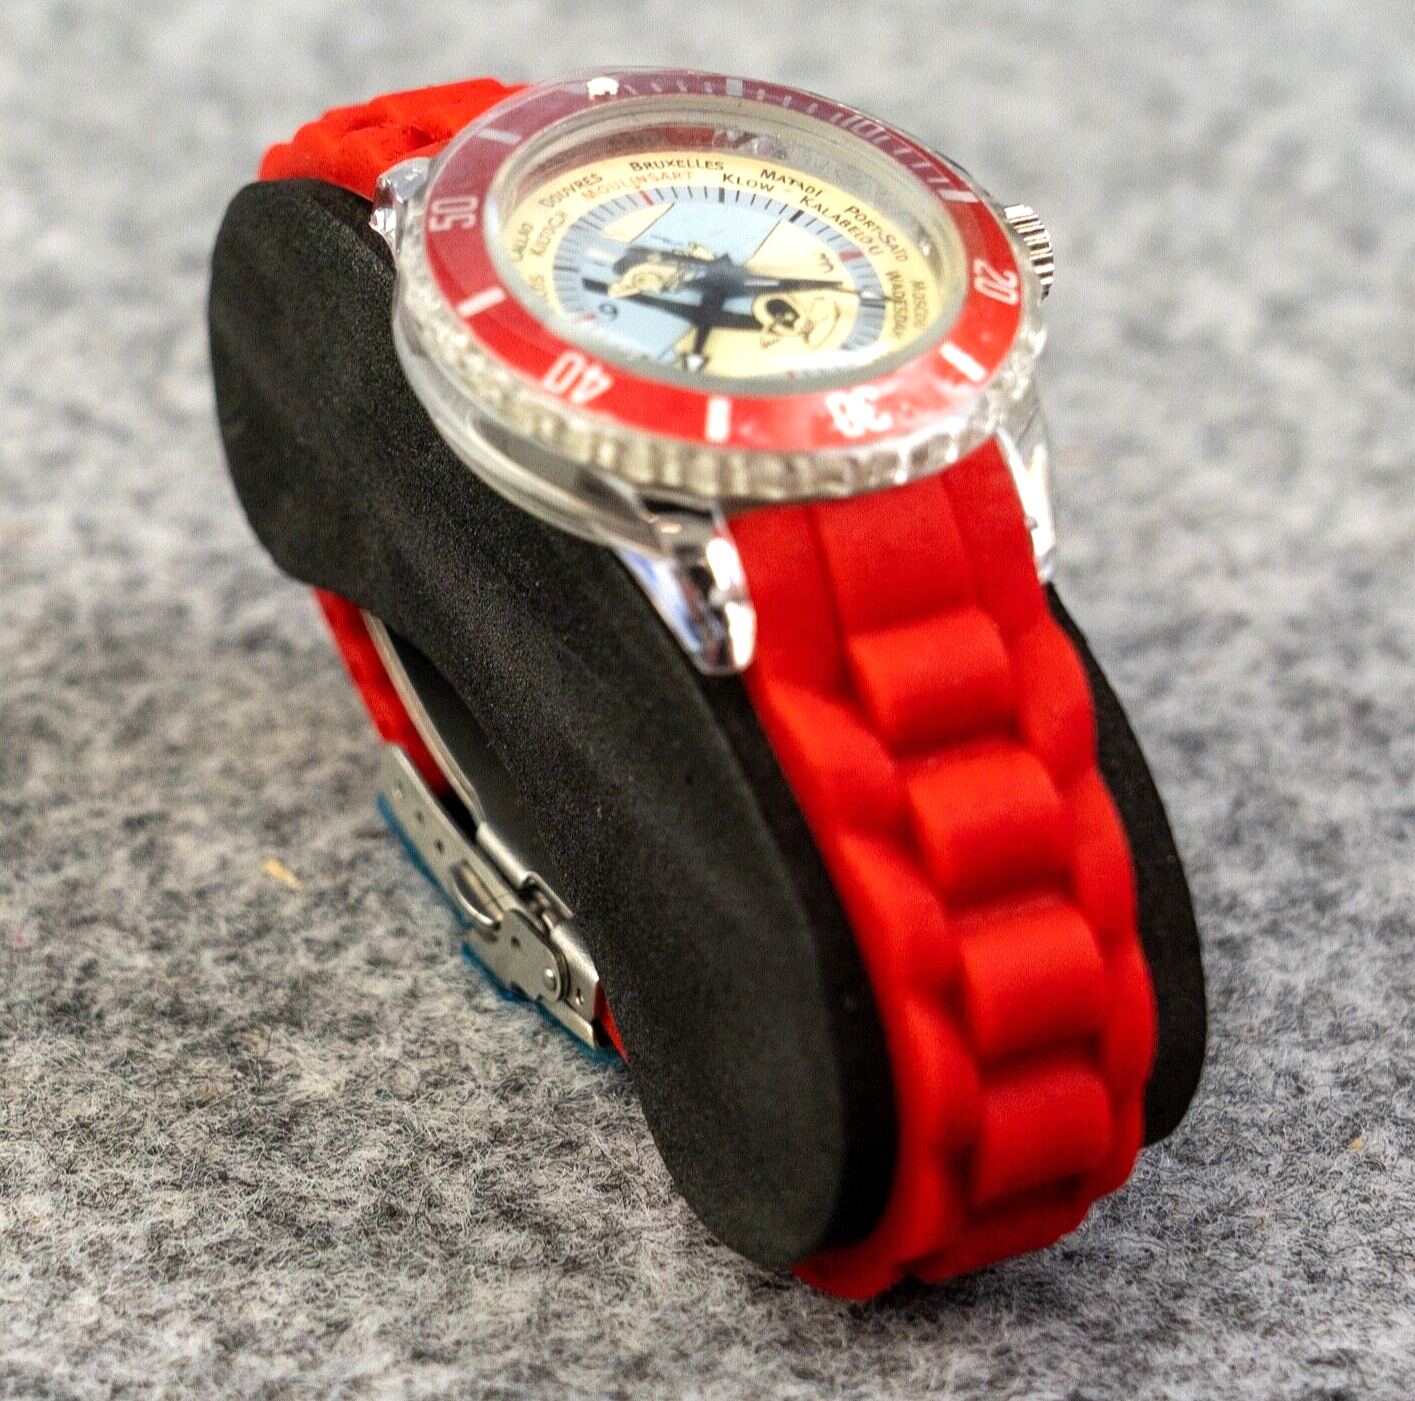 Moulinsart "Tintin Time" Watch 82414 Soviets Plane Red strap Unisex wristwatch